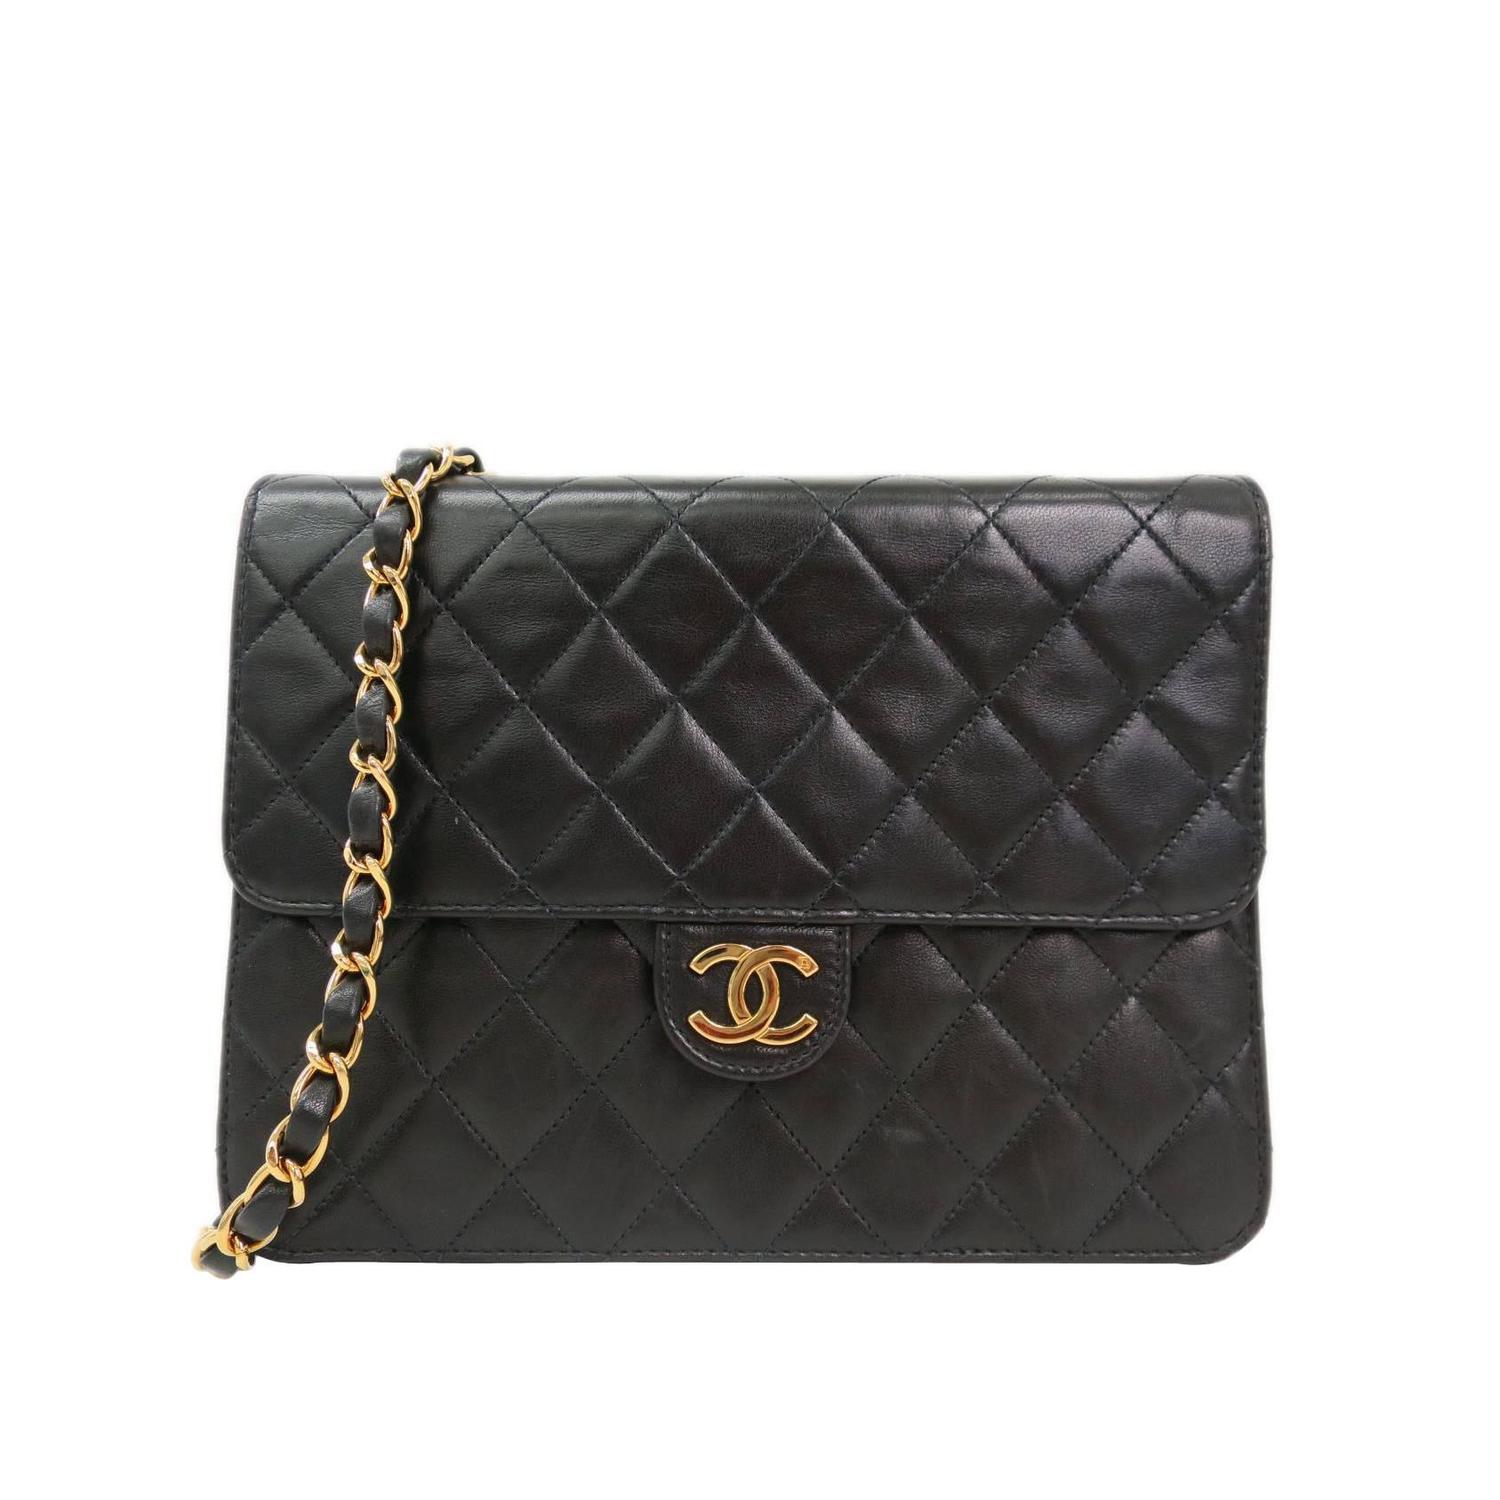 Chanel Handbags Store In Chicago | SEMA Data Co-op